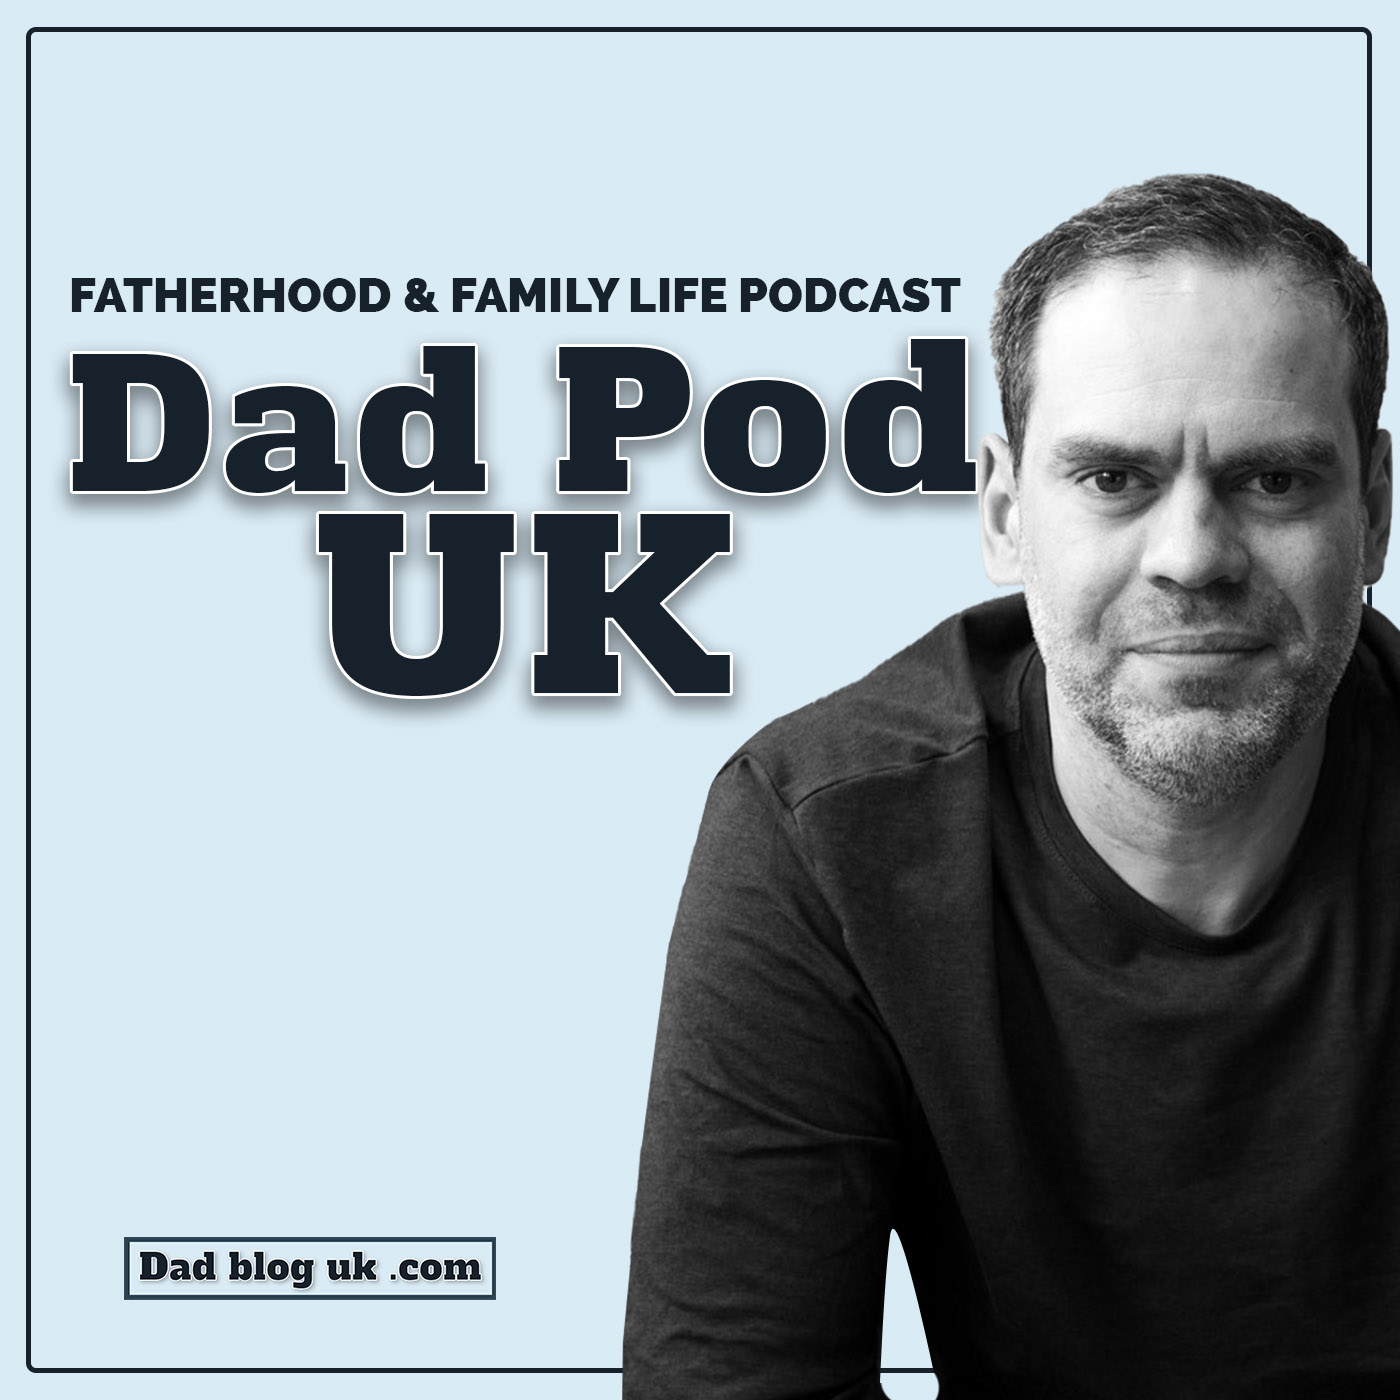 The DadPodUK podcast badge from John Adams of Dadbloguk